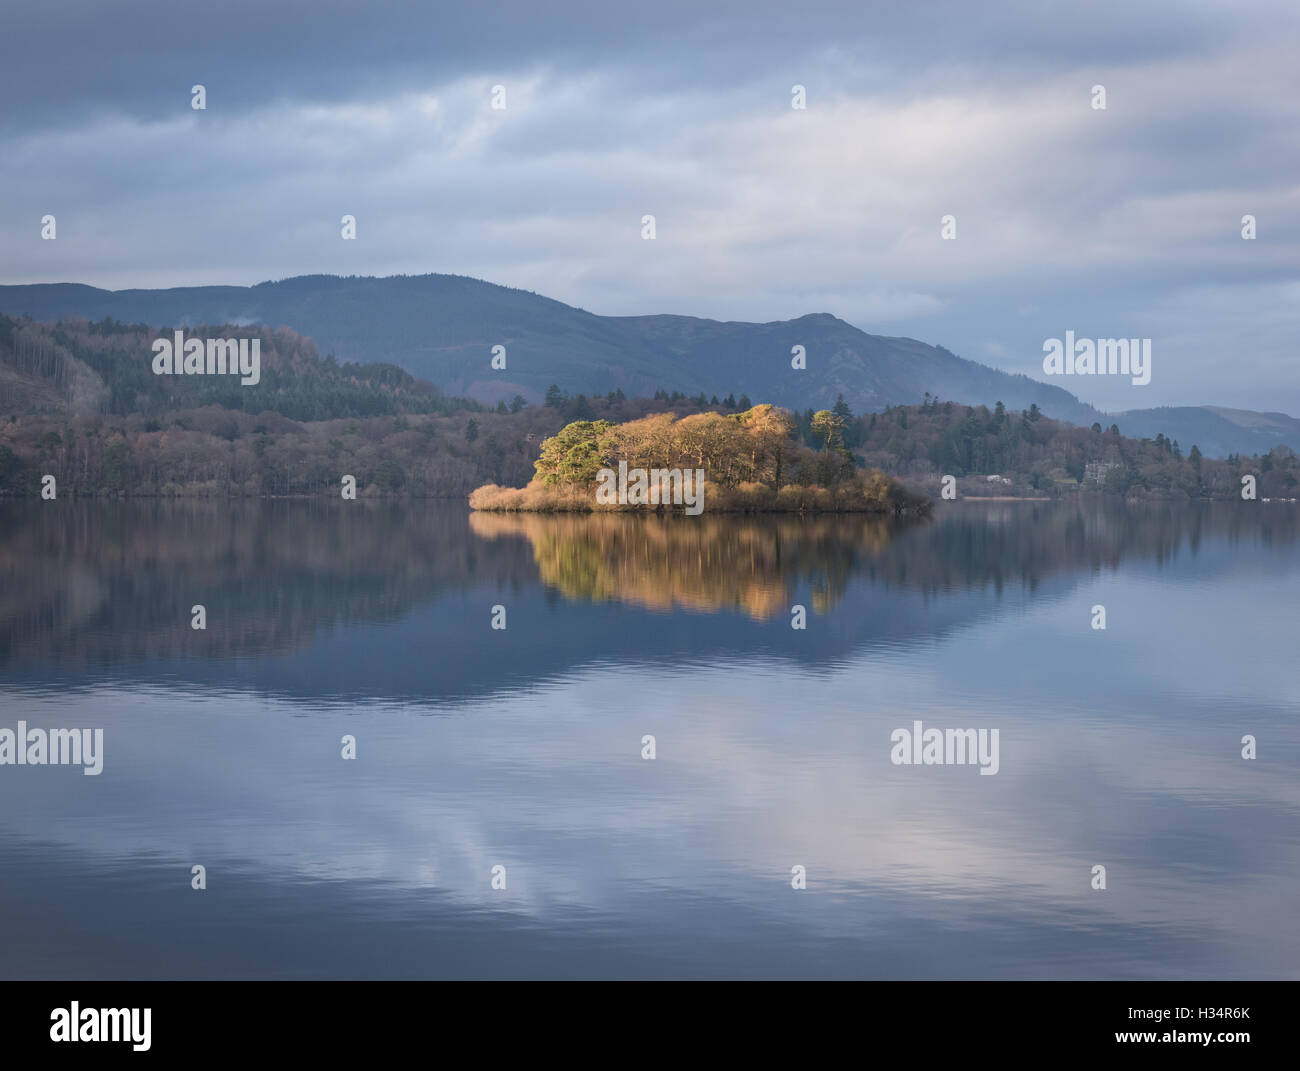 Rampsholme Island, Derwent Water, Lake District National Park, Royaume-Uni Banque D'Images